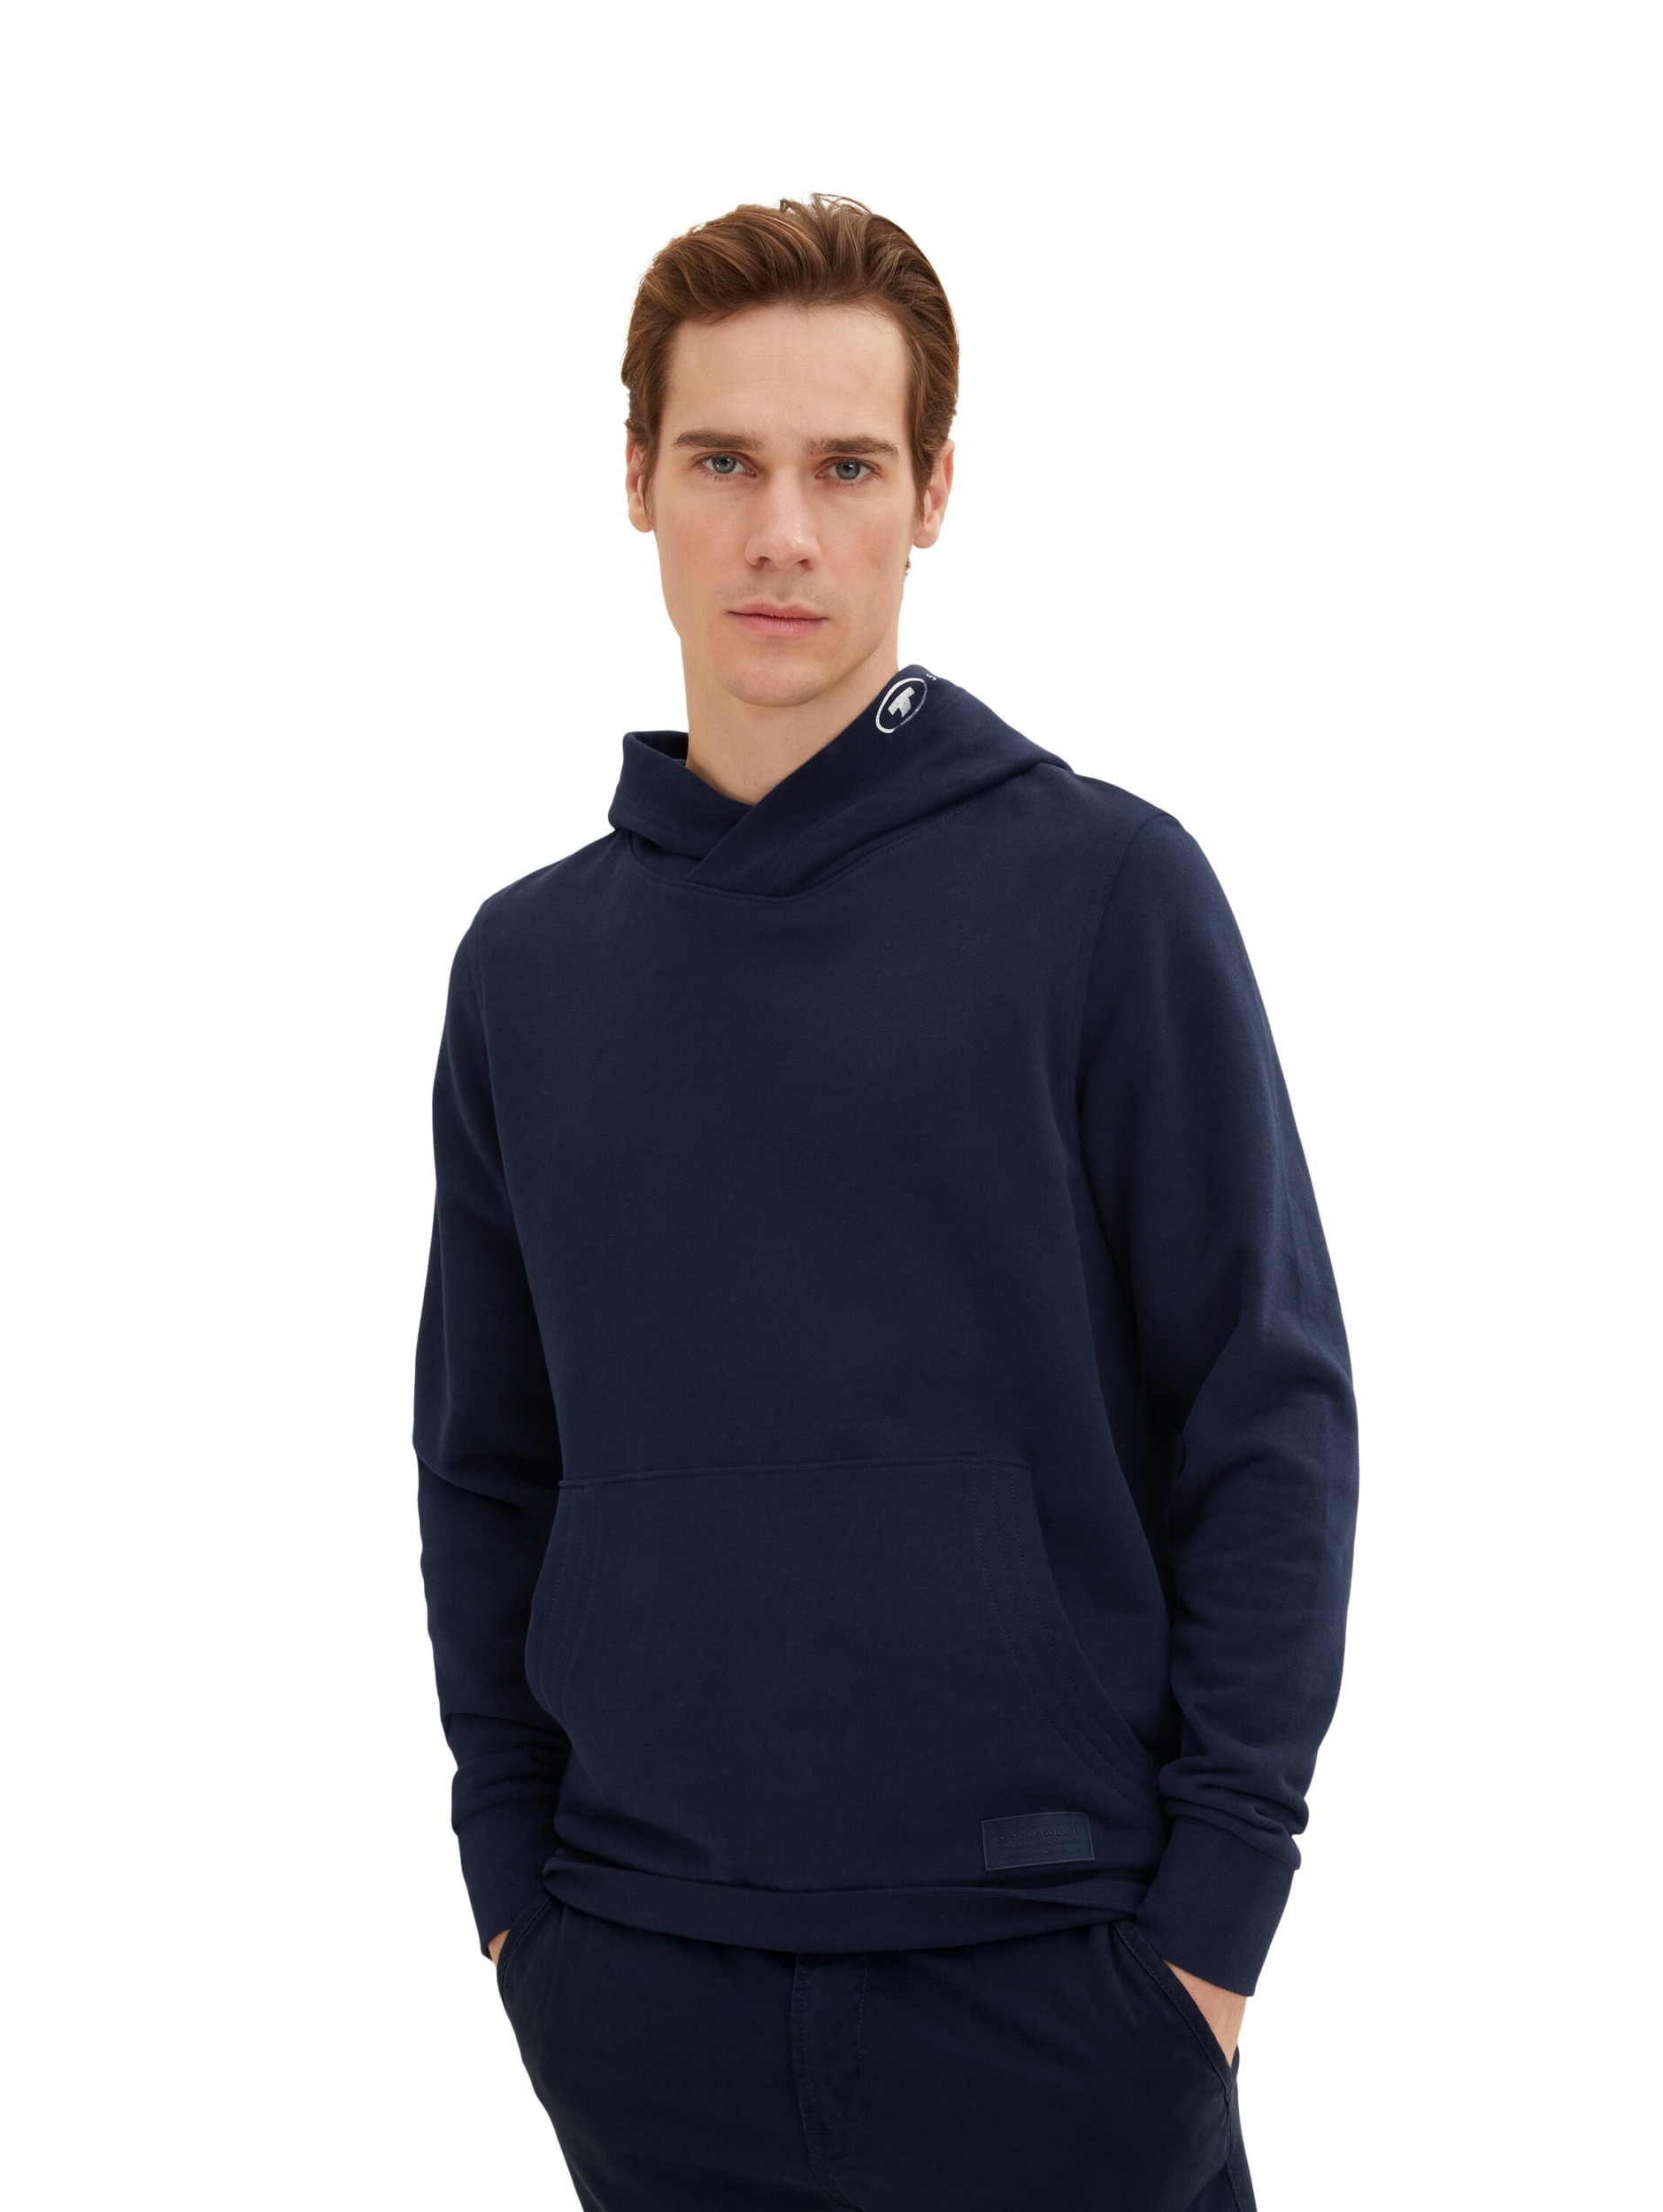 TOM TAILOR hoodie with kaufen online structur